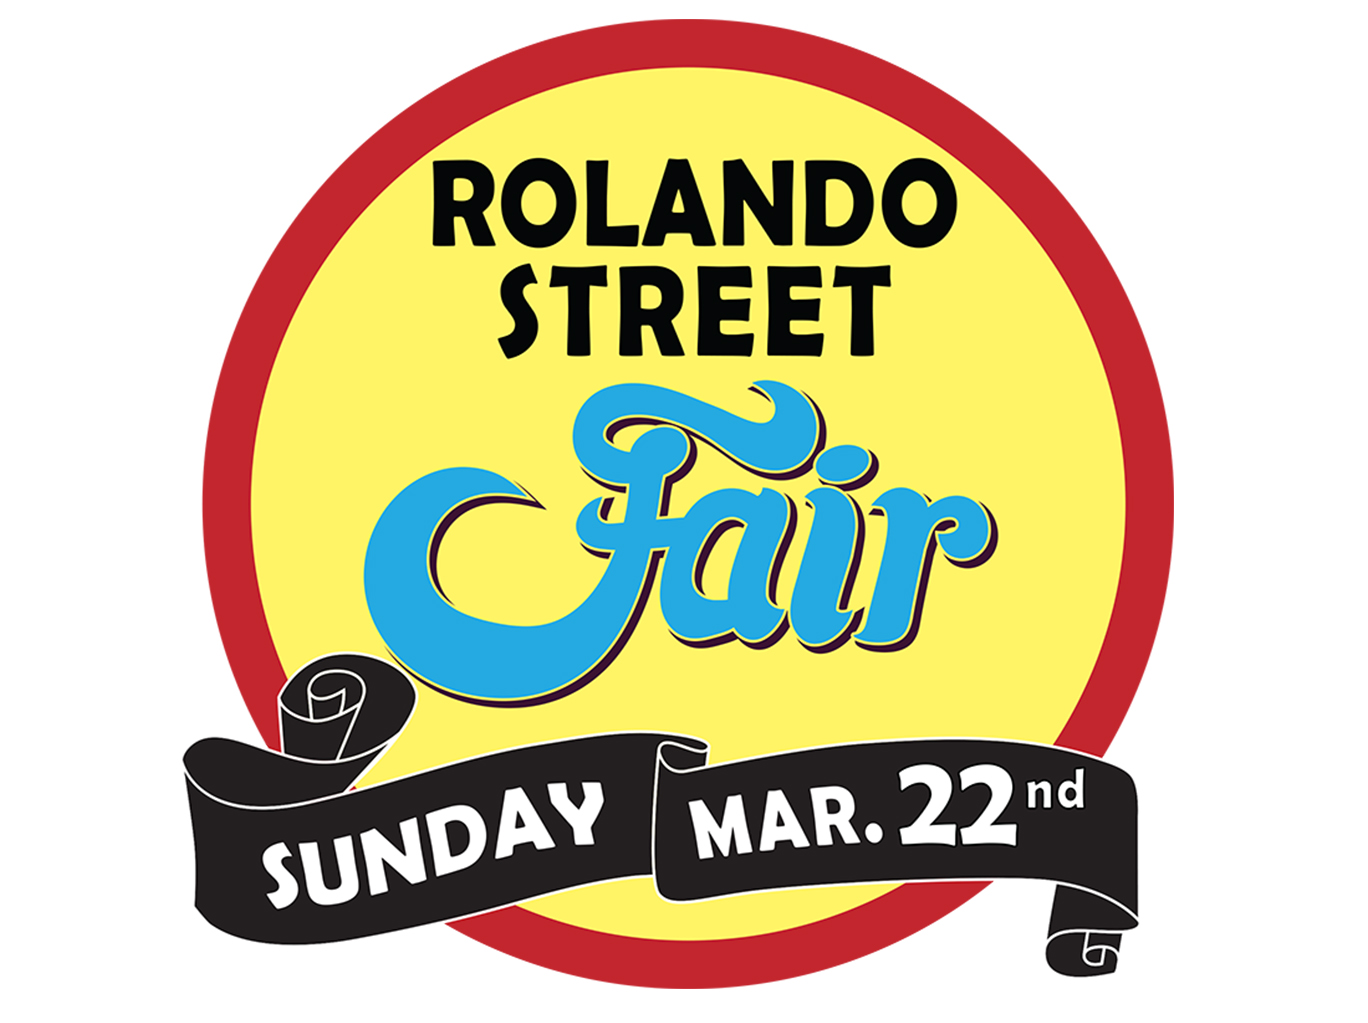 Rolando Street Fair